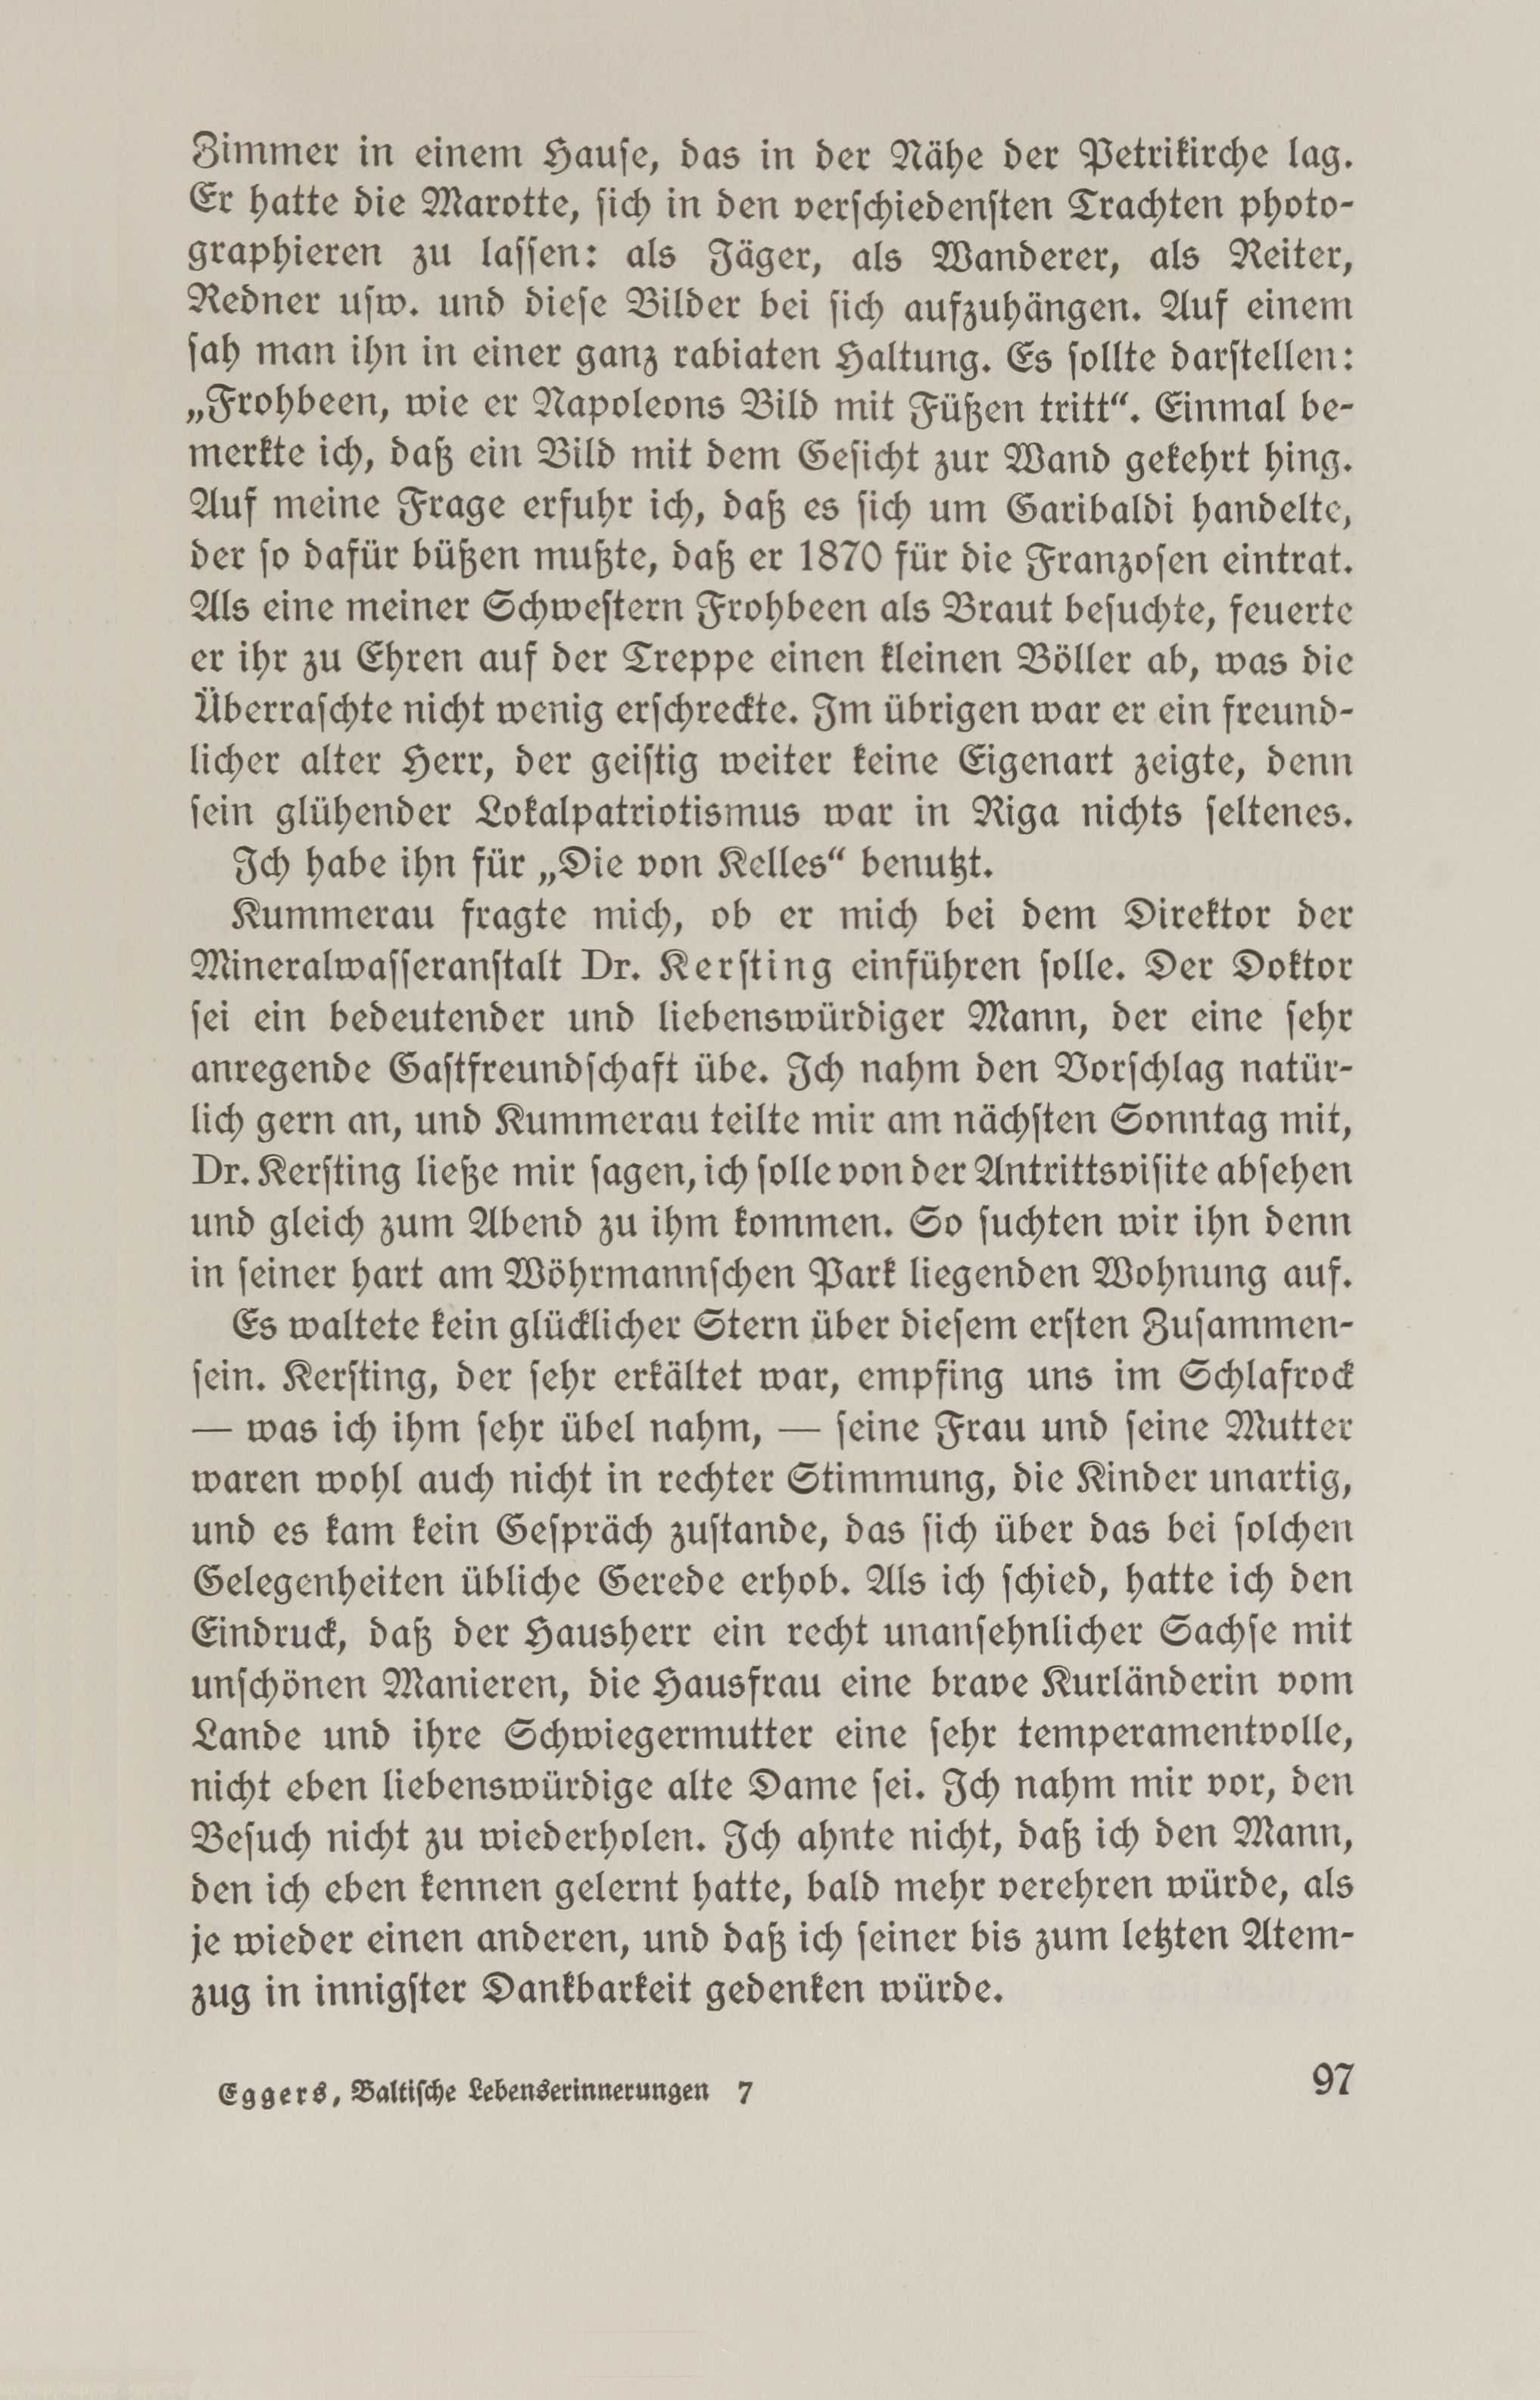 In Riga (1926) | 11. (97) Main body of text